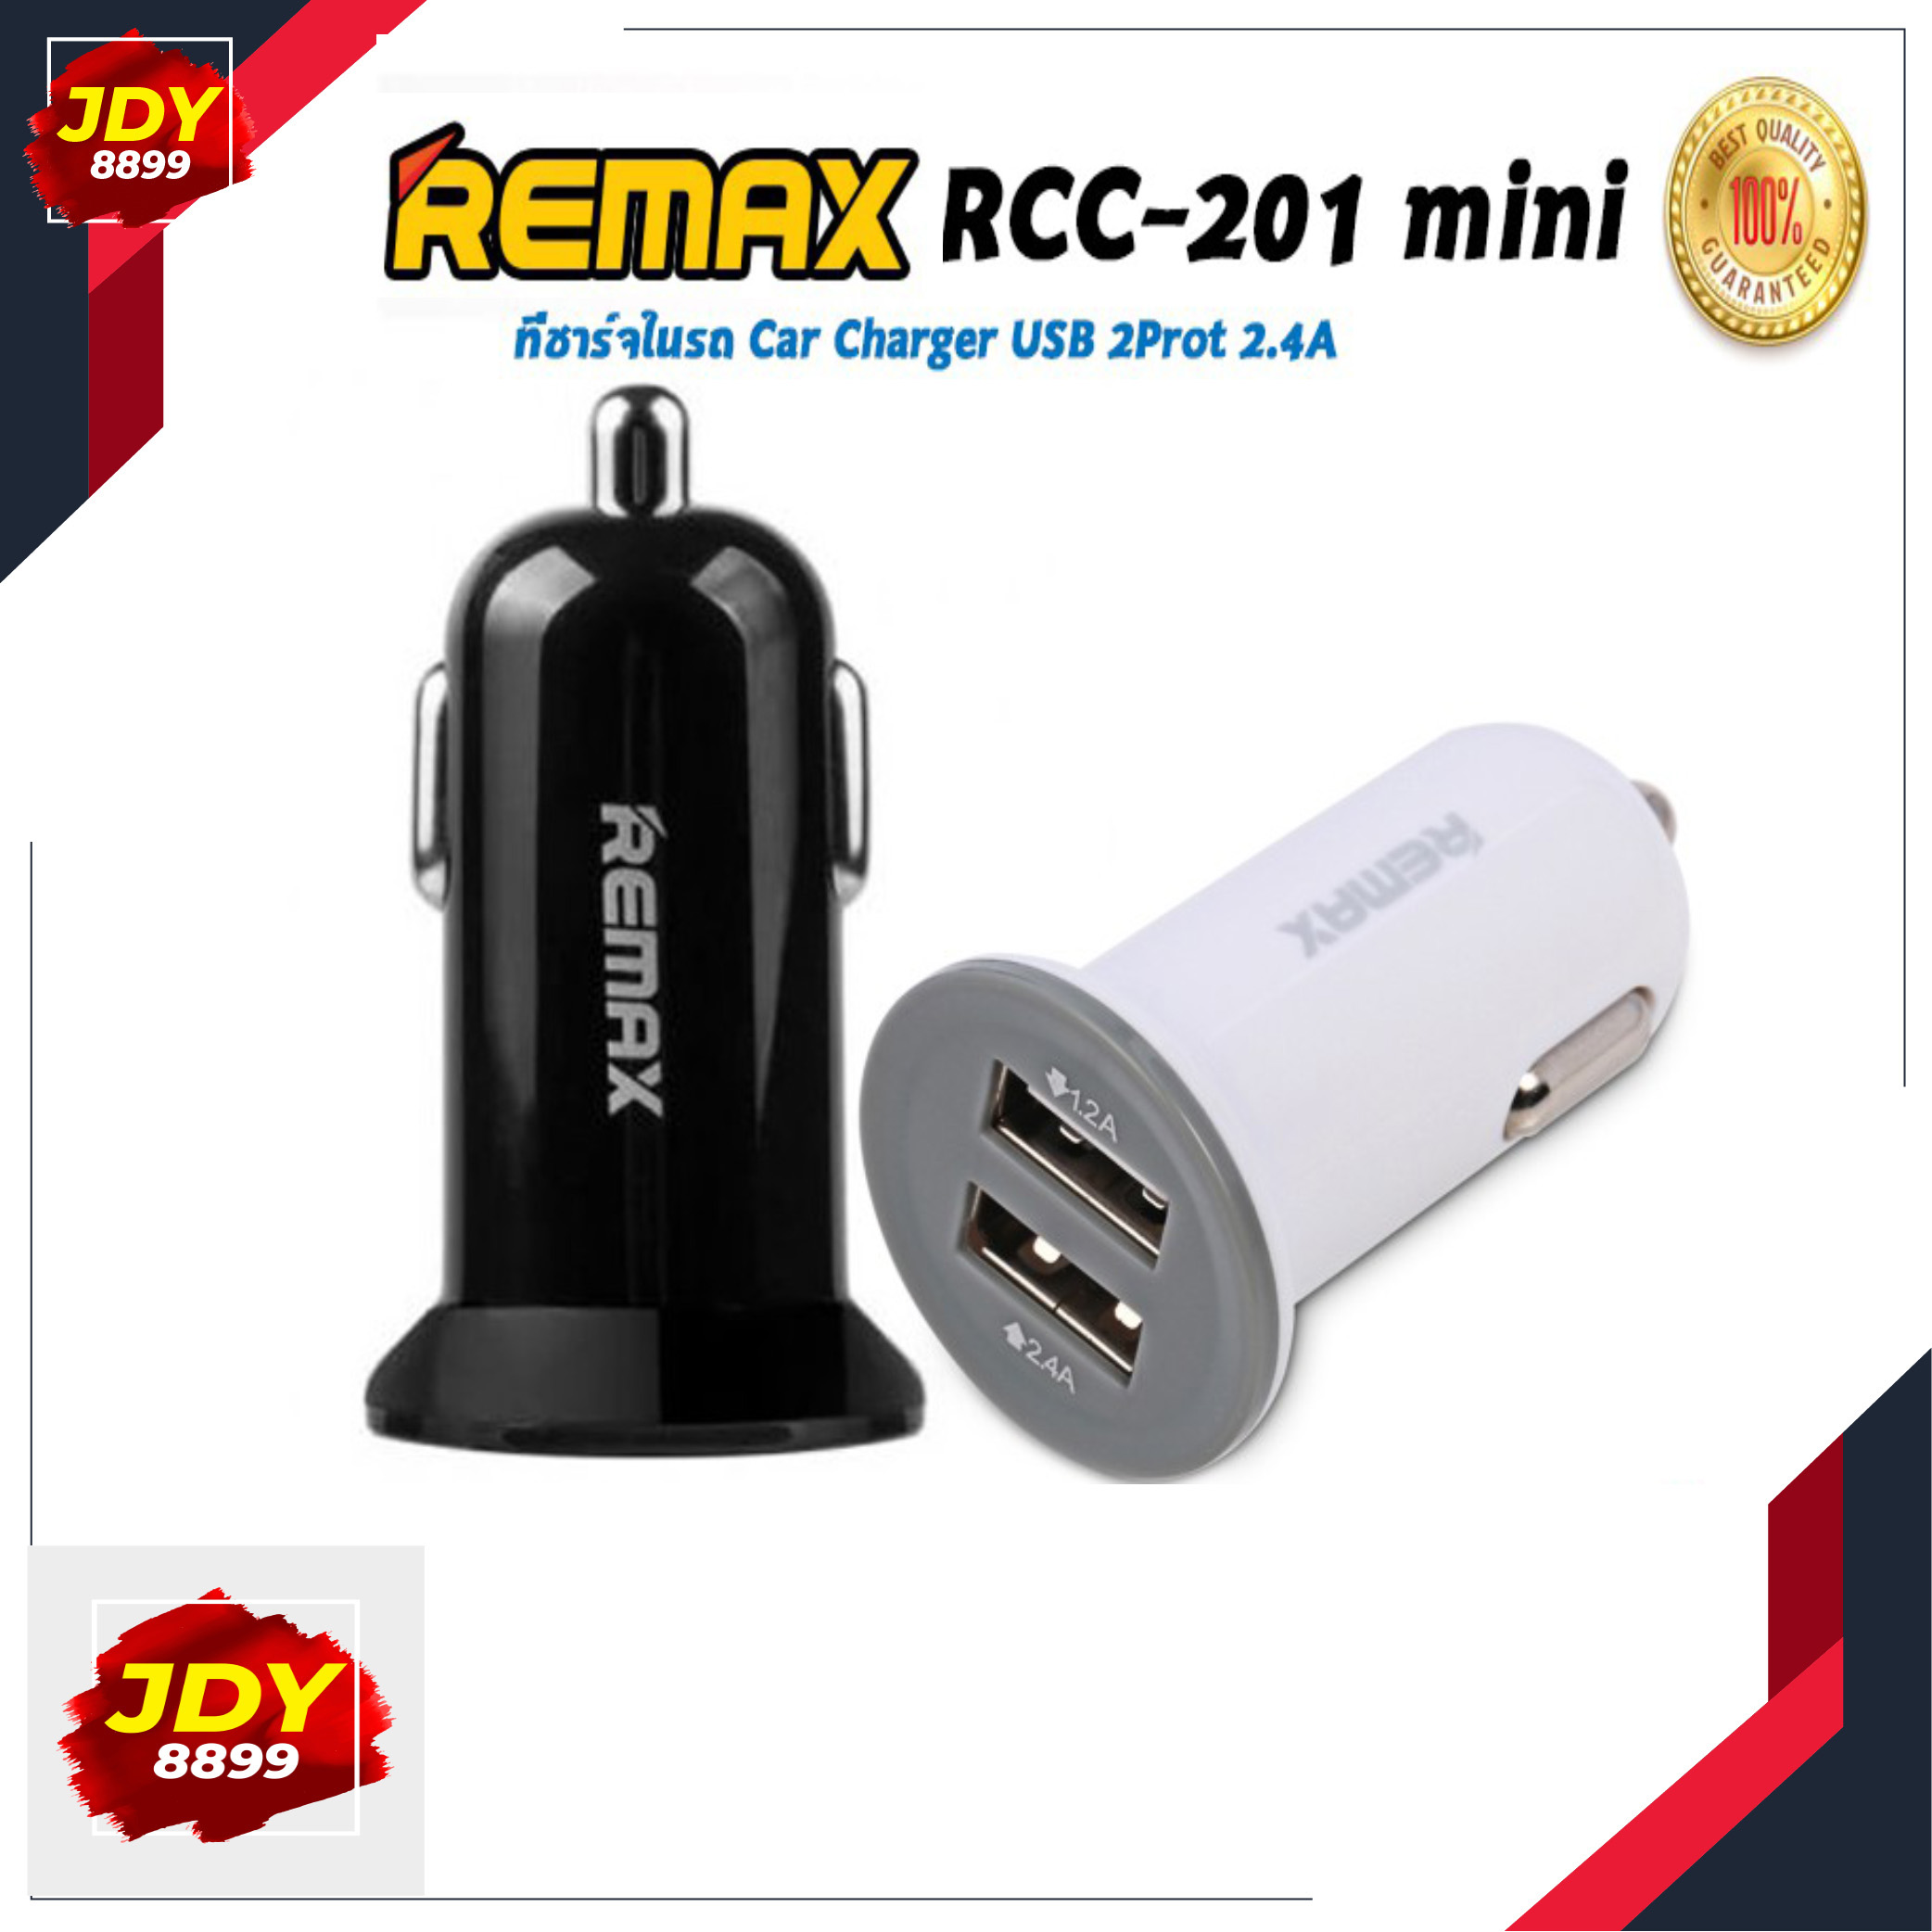 Remax ของแท้ 100% RCC-201 MINI ทีชาร์จในรถ Car Charger USB 2Prot 2.1A